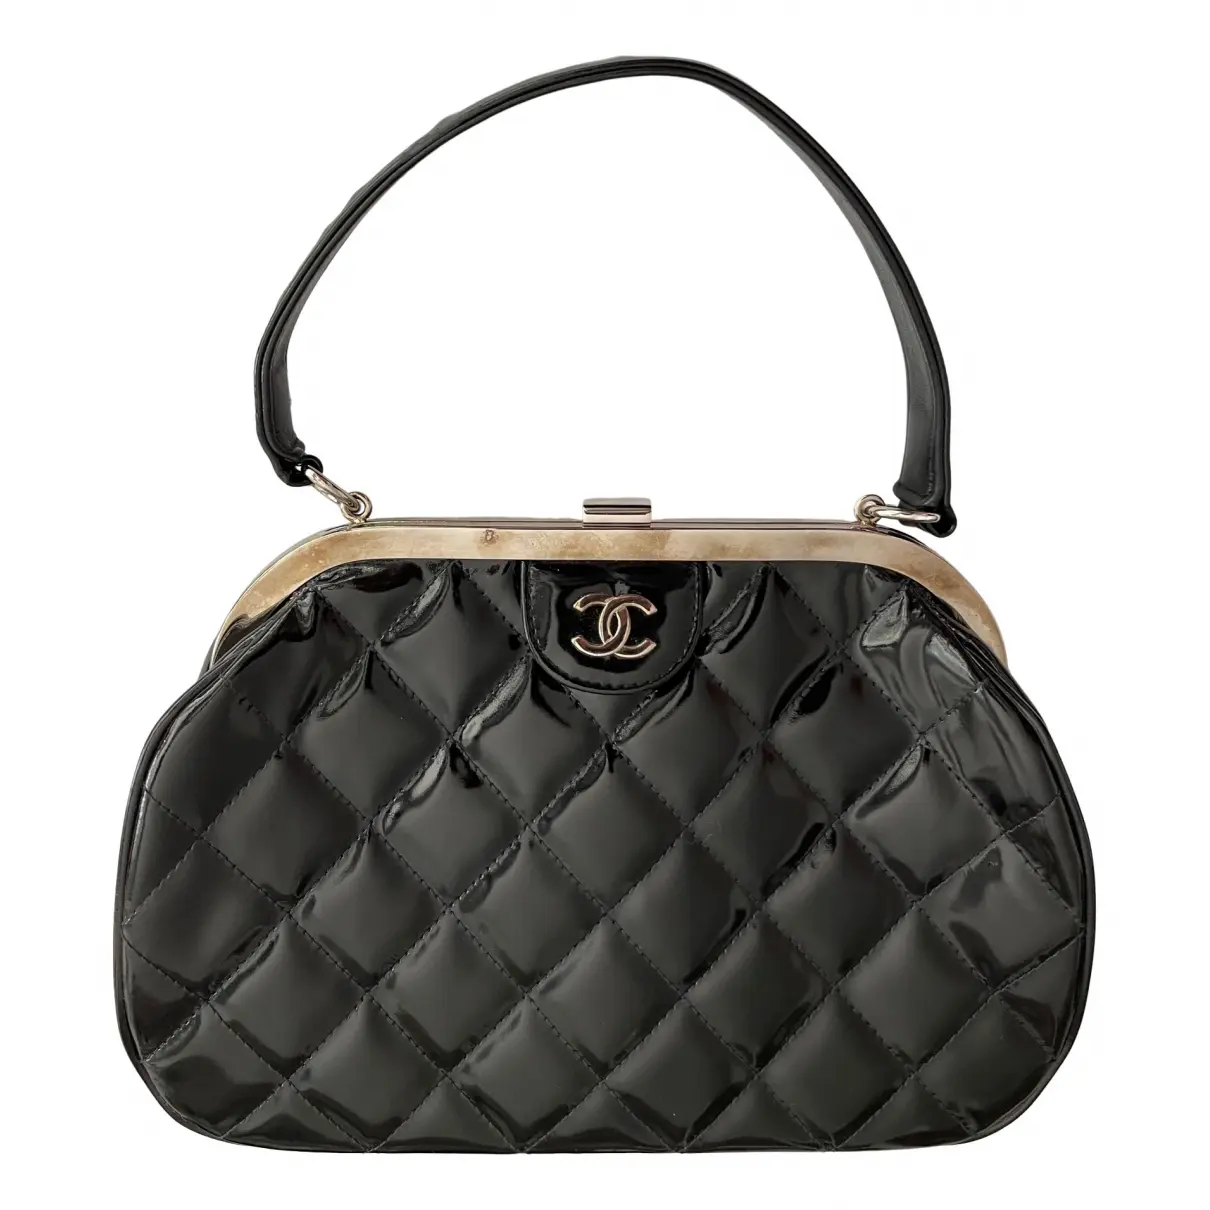 Trendy CC patent leather handbag Chanel - Vintage